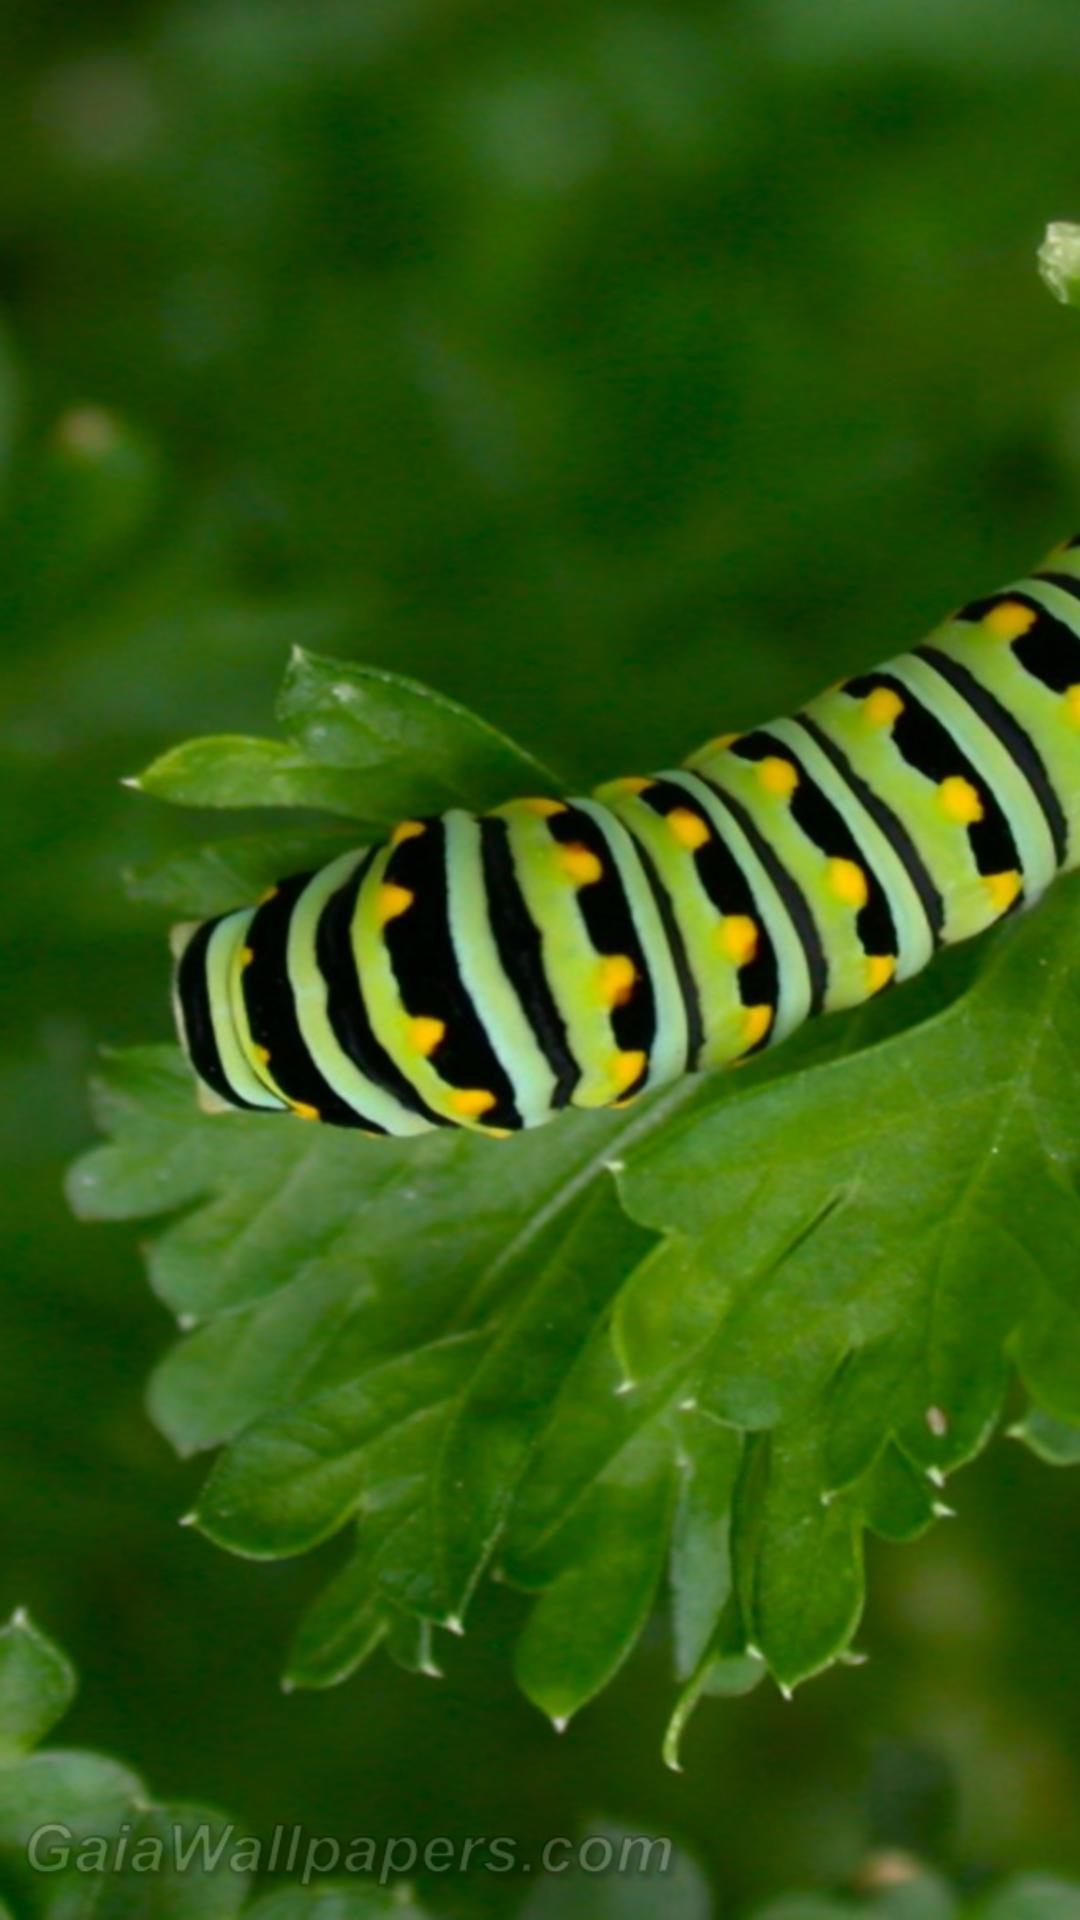 Caterpillar on a parsley leaf - Free desktop wallpapers